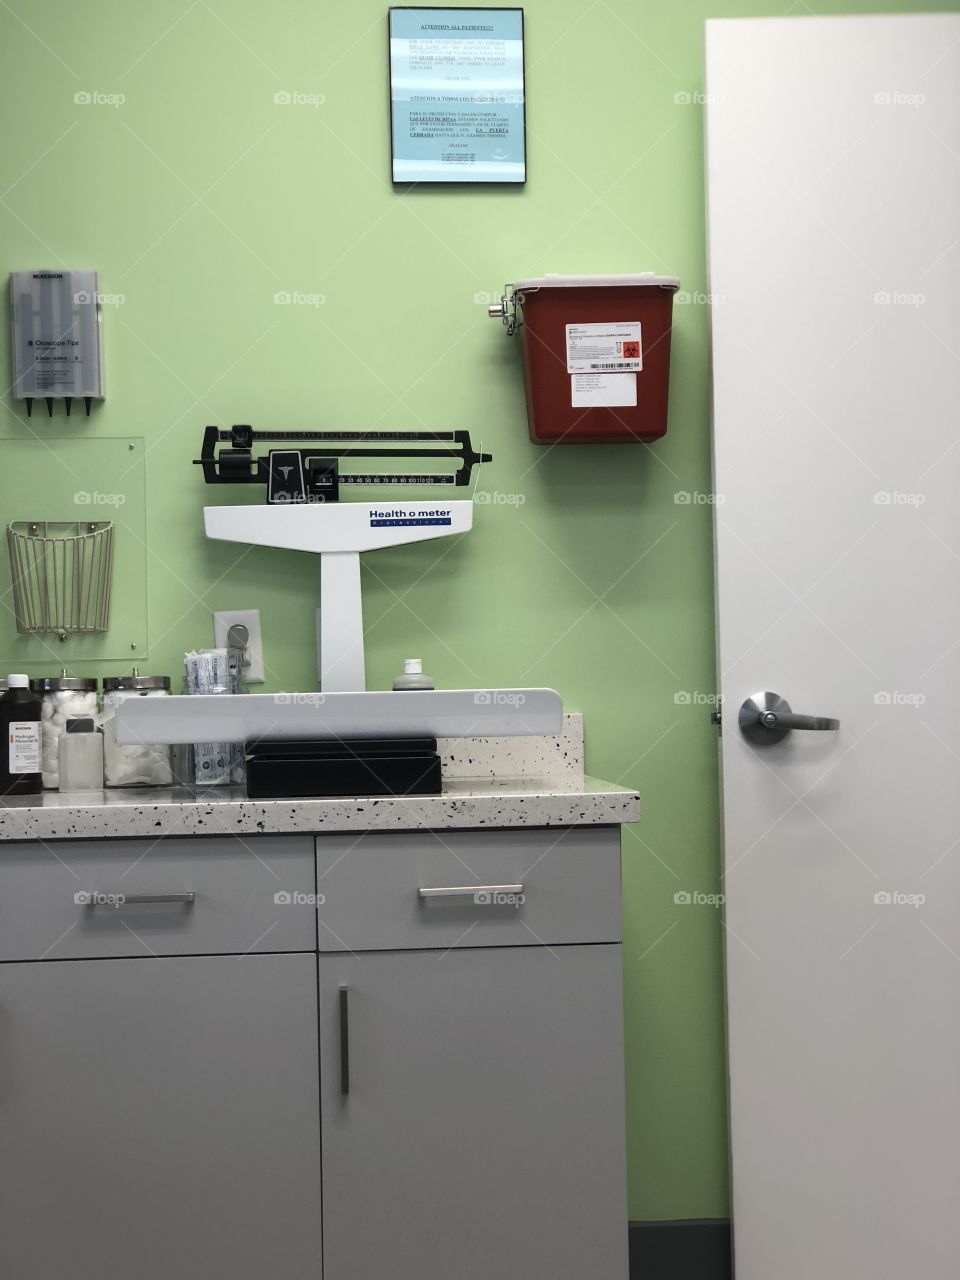 Pediatrician’s office - umpteenth visit